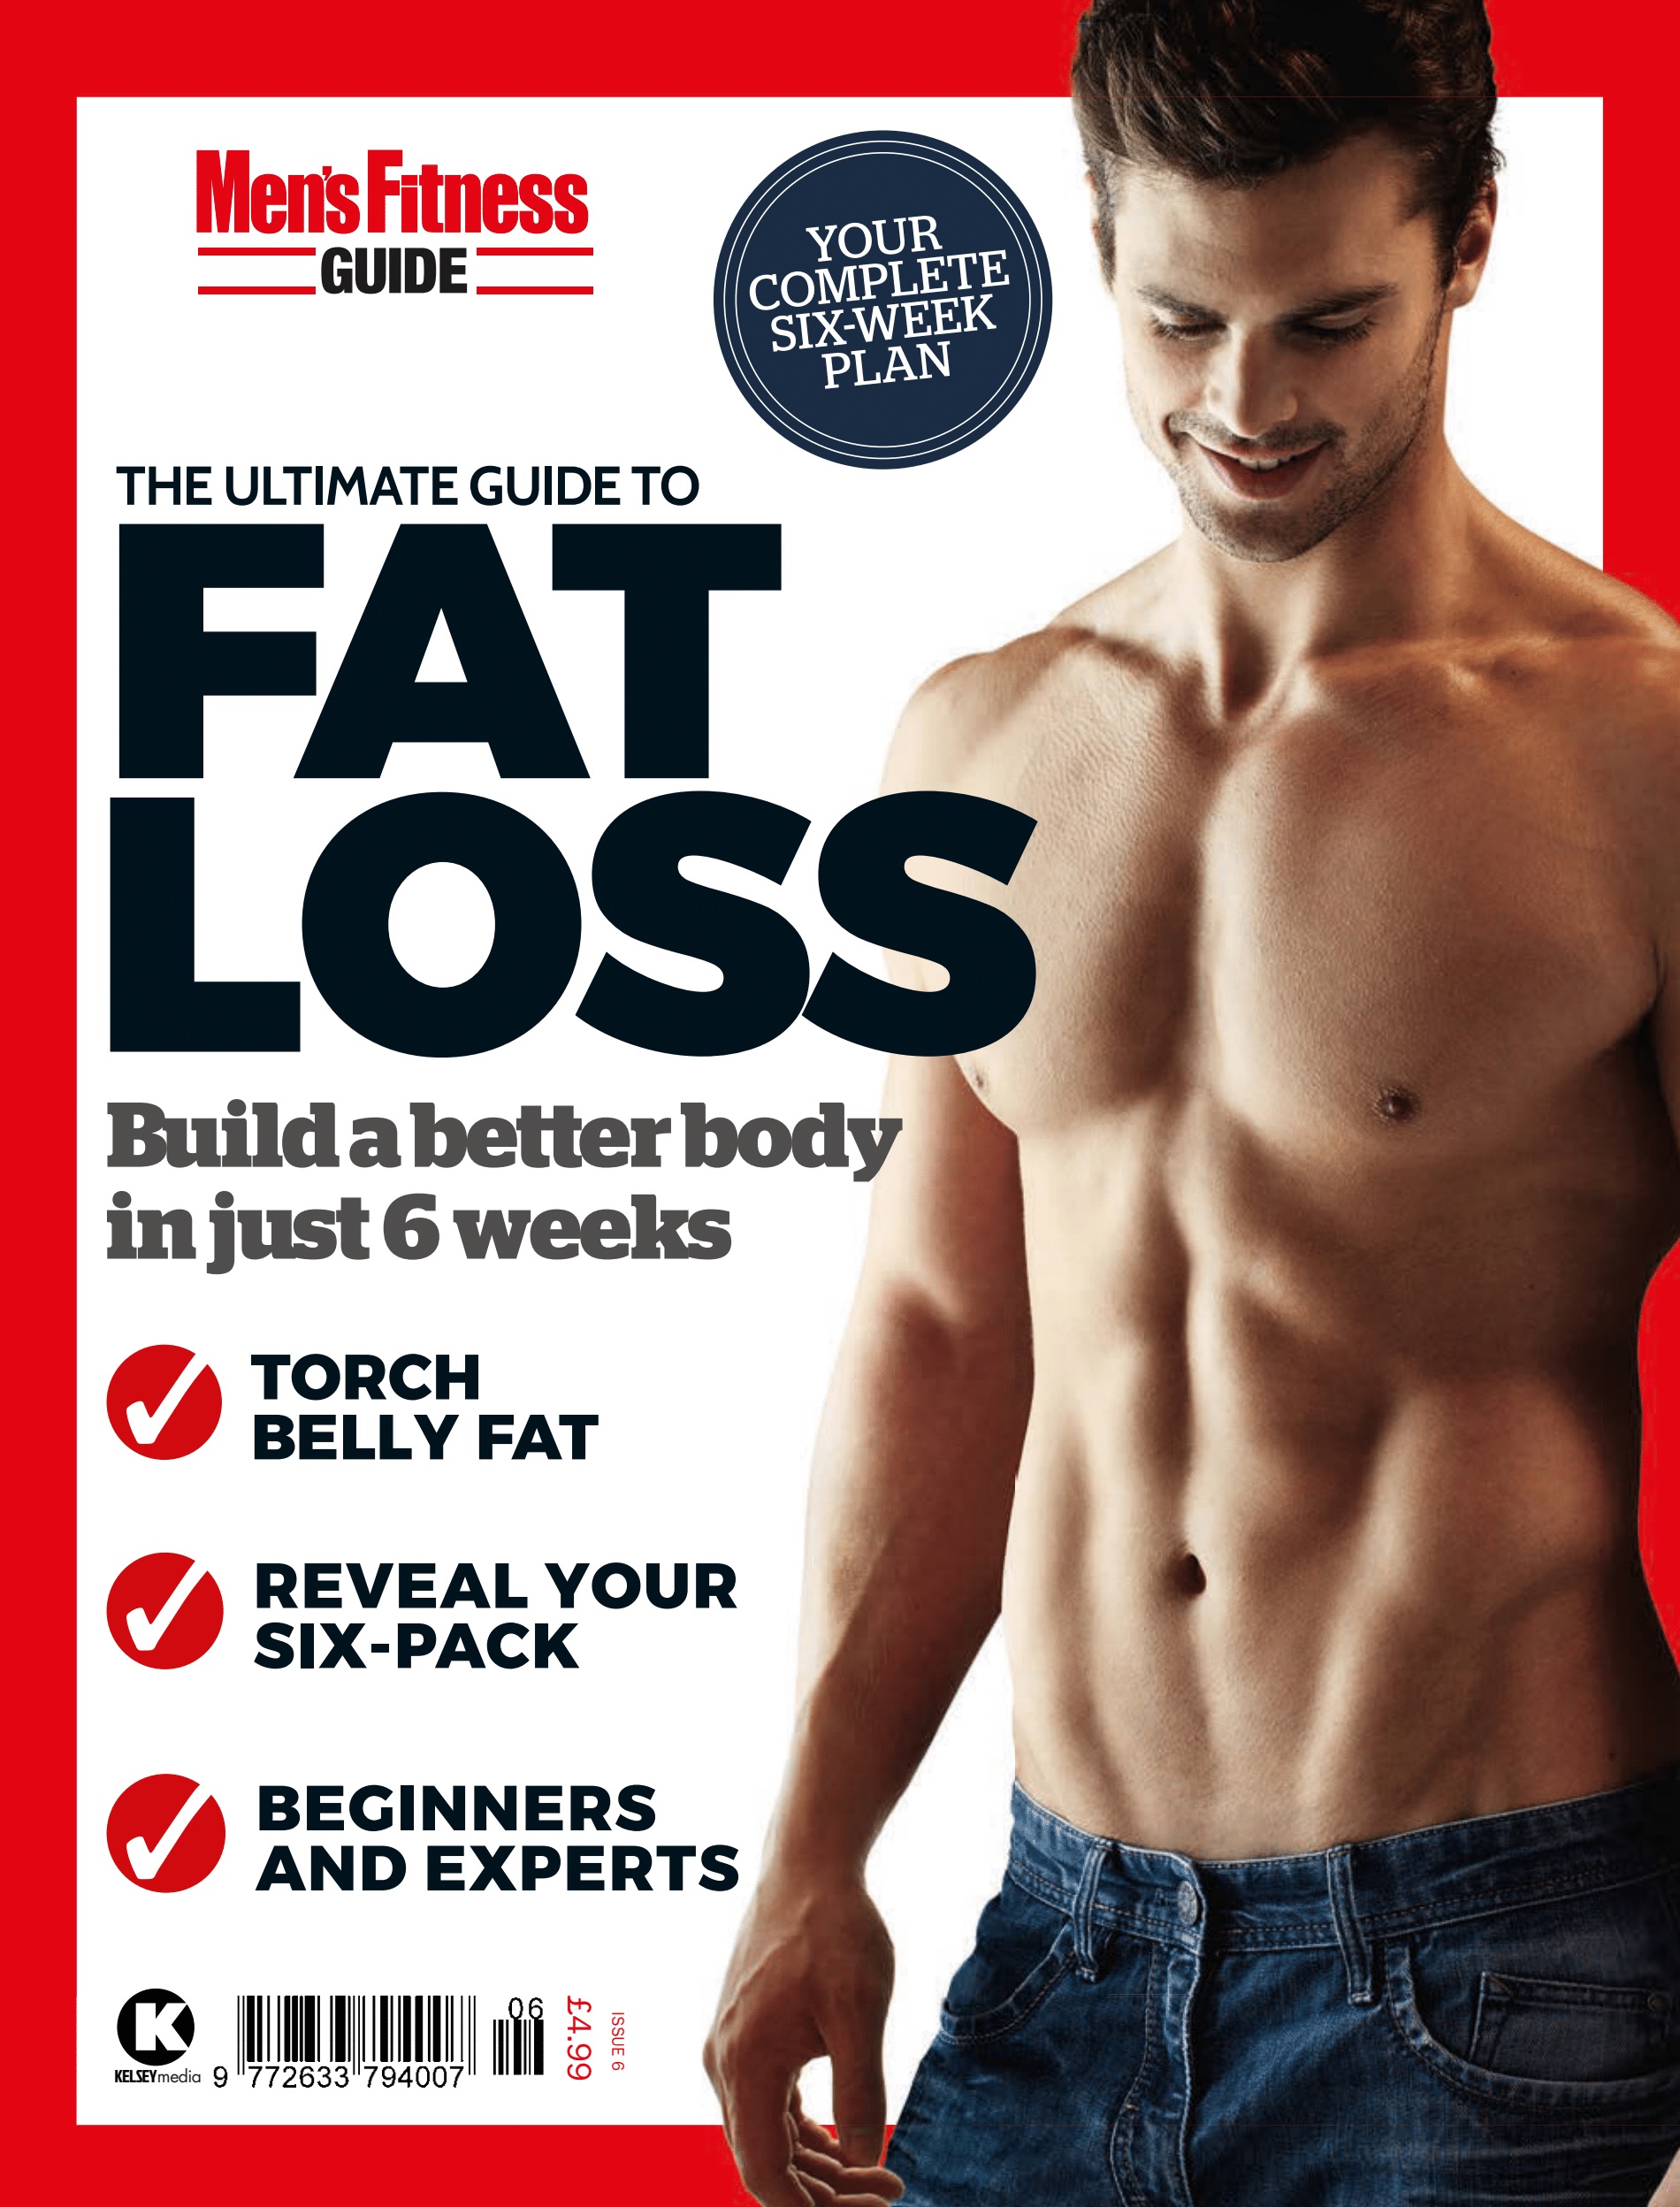 Men's Fitness Guide #6 - Fat Loss